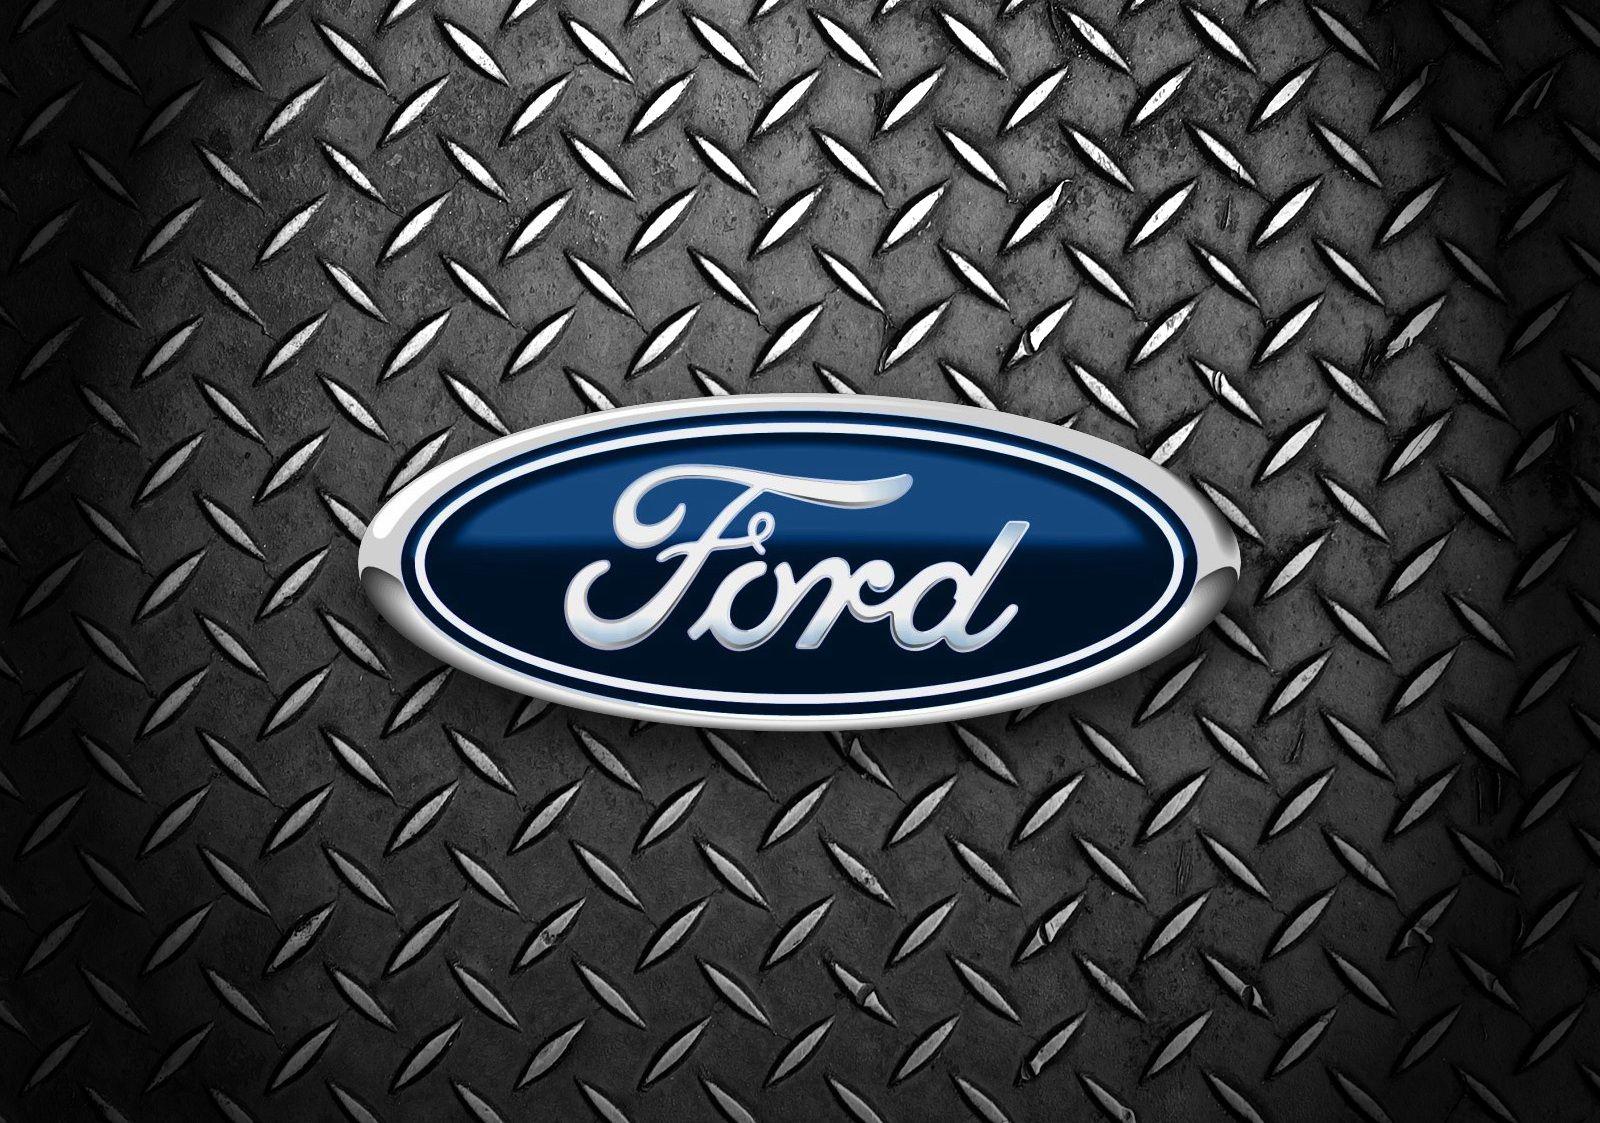 Original Ford Logo - Ford Logo, Ford Car Symbol Meaning and History | Car Brand Names.com